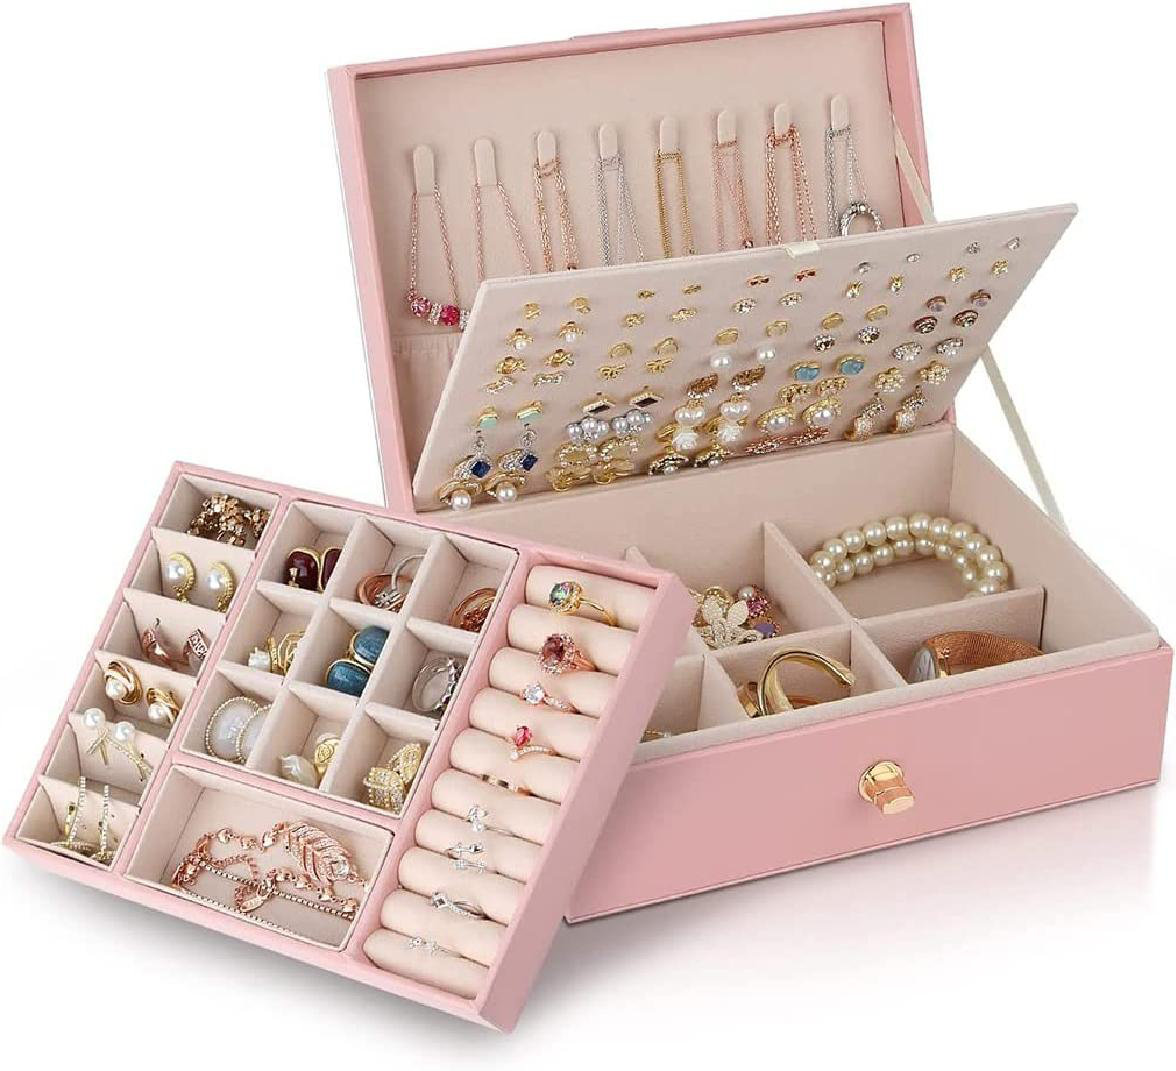 Mercer41 Jewelry Box | Wayfair